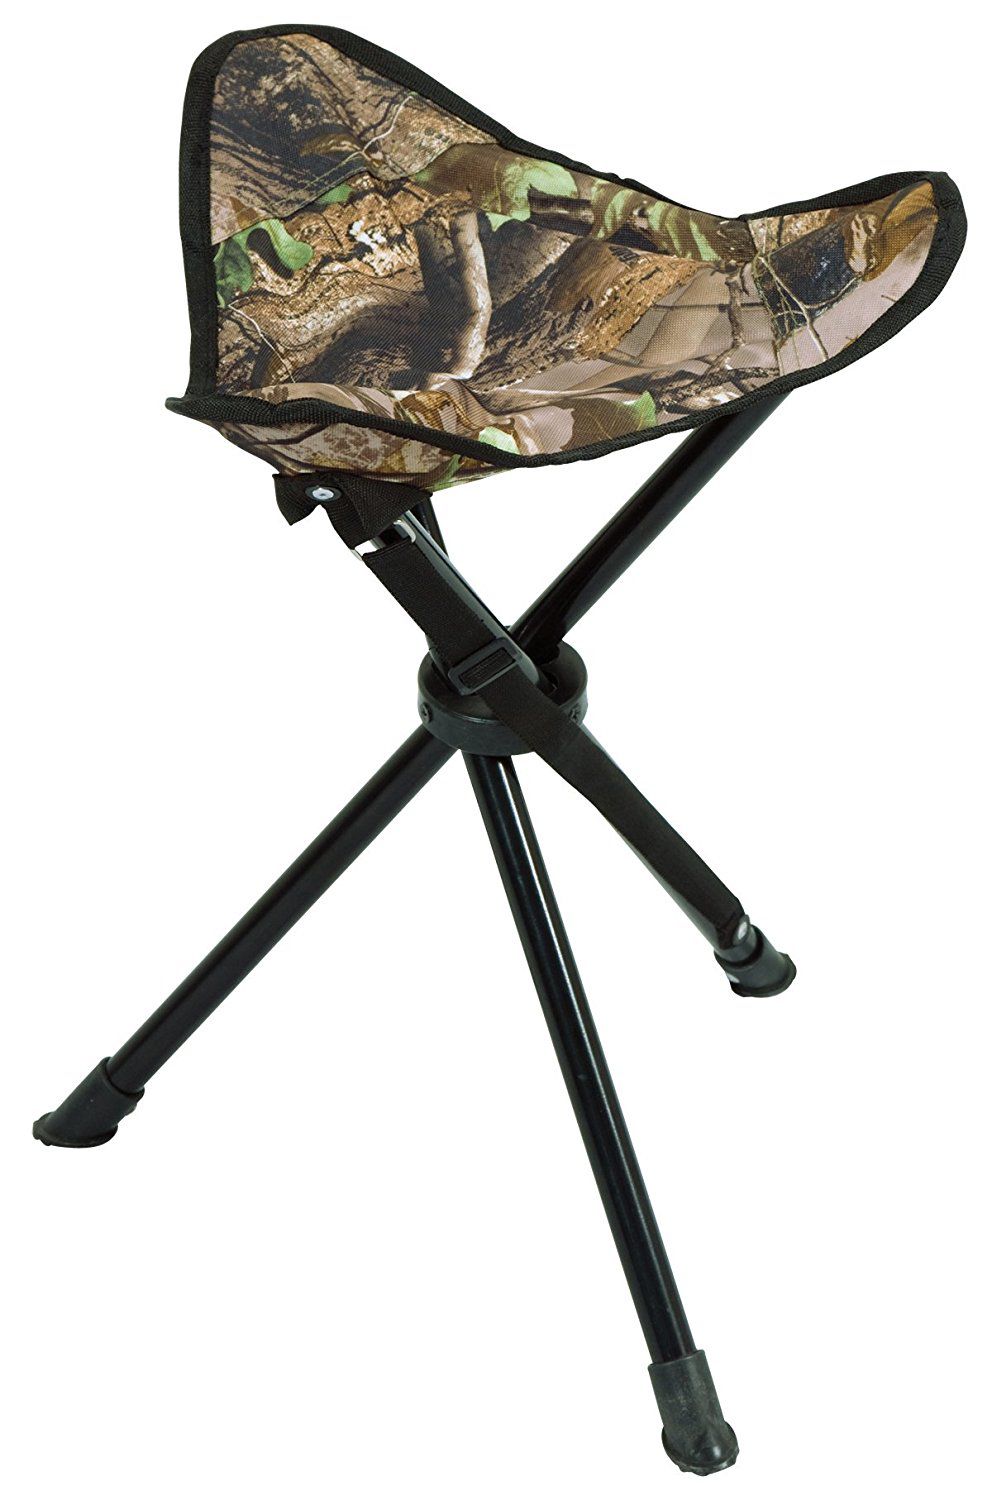 Ameristep 3RG1A013 Blind Tripod Stool Chair RealTree Xtra Green Camo NEW 